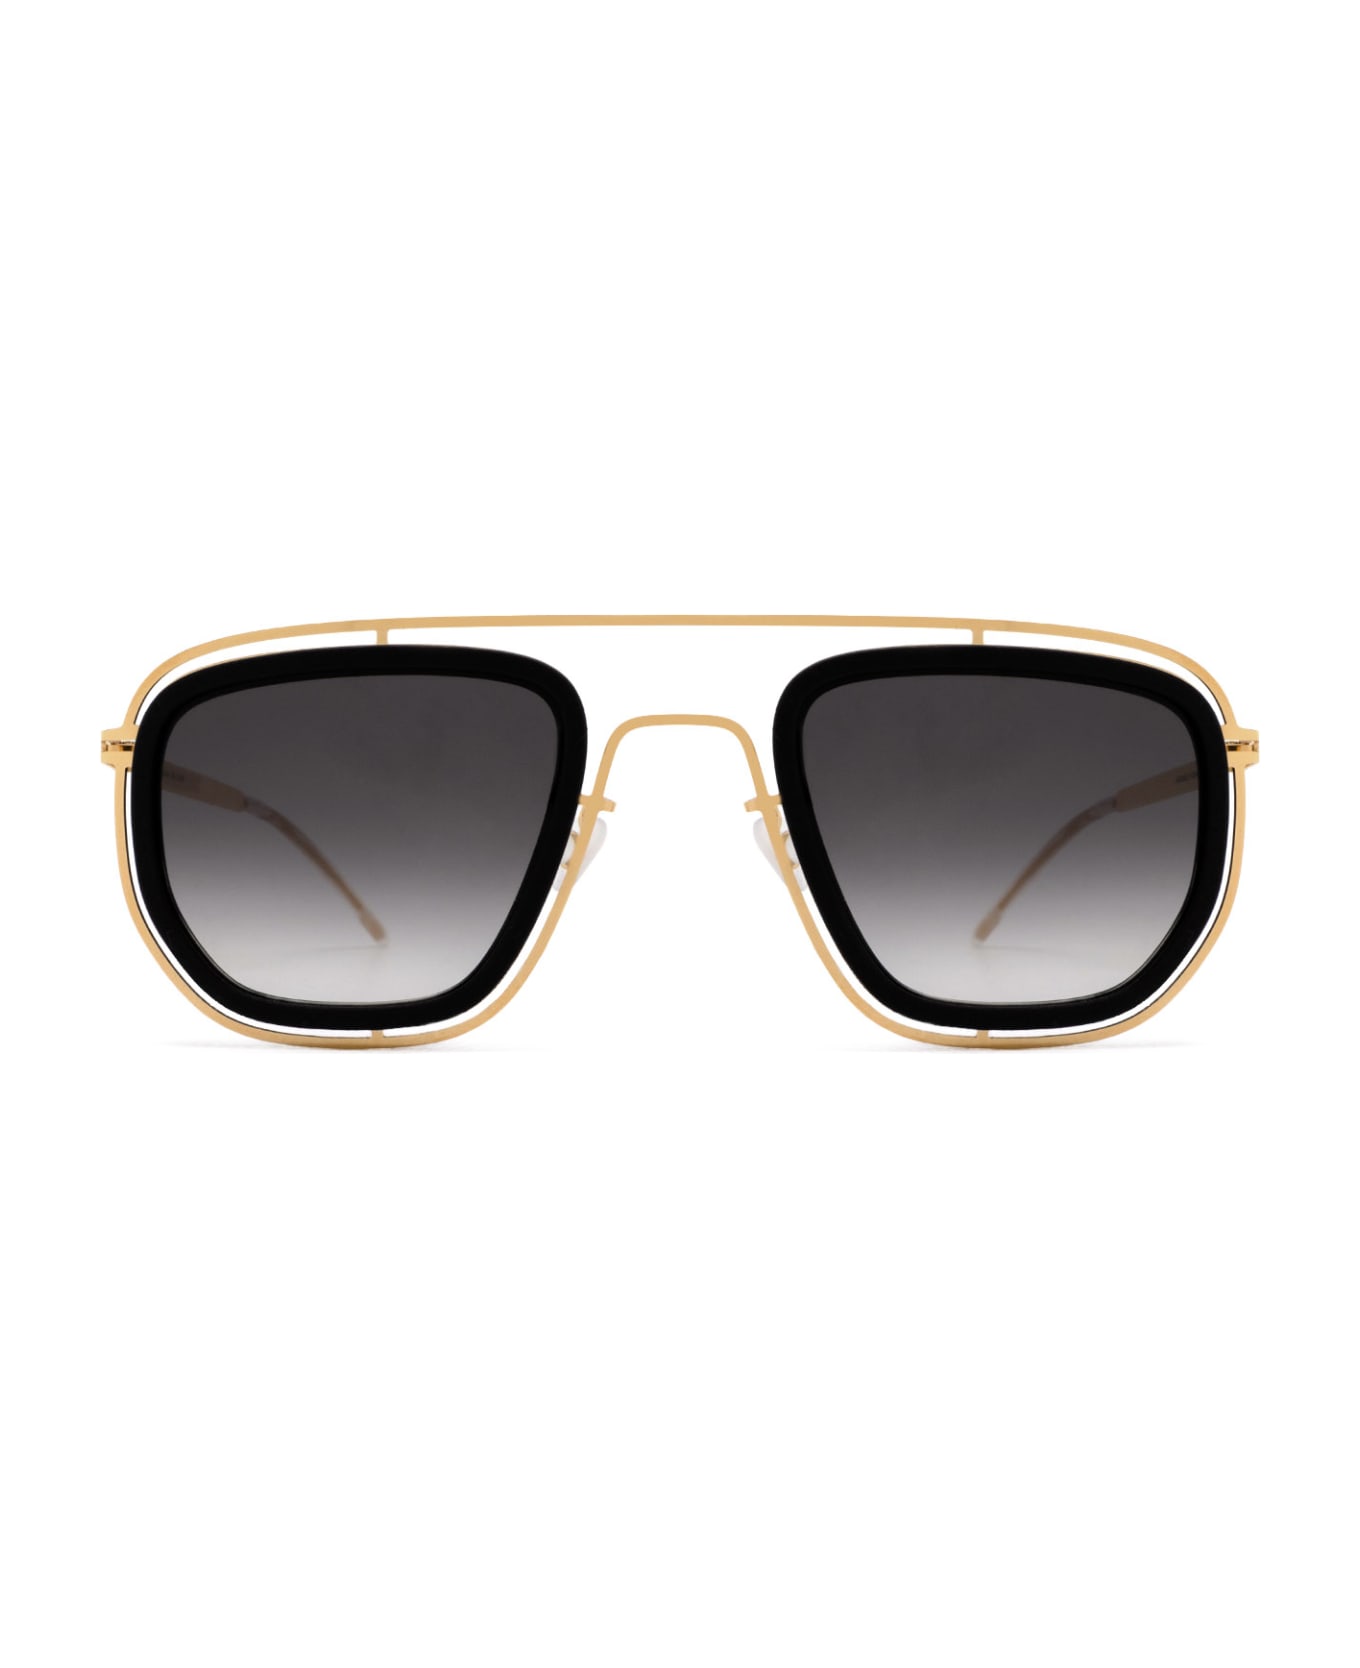 Mykita Ferlo Sun Mh7-pitch Black/glossy Gold Sunglasses - MH7-Pitch Black/Glossy Gold